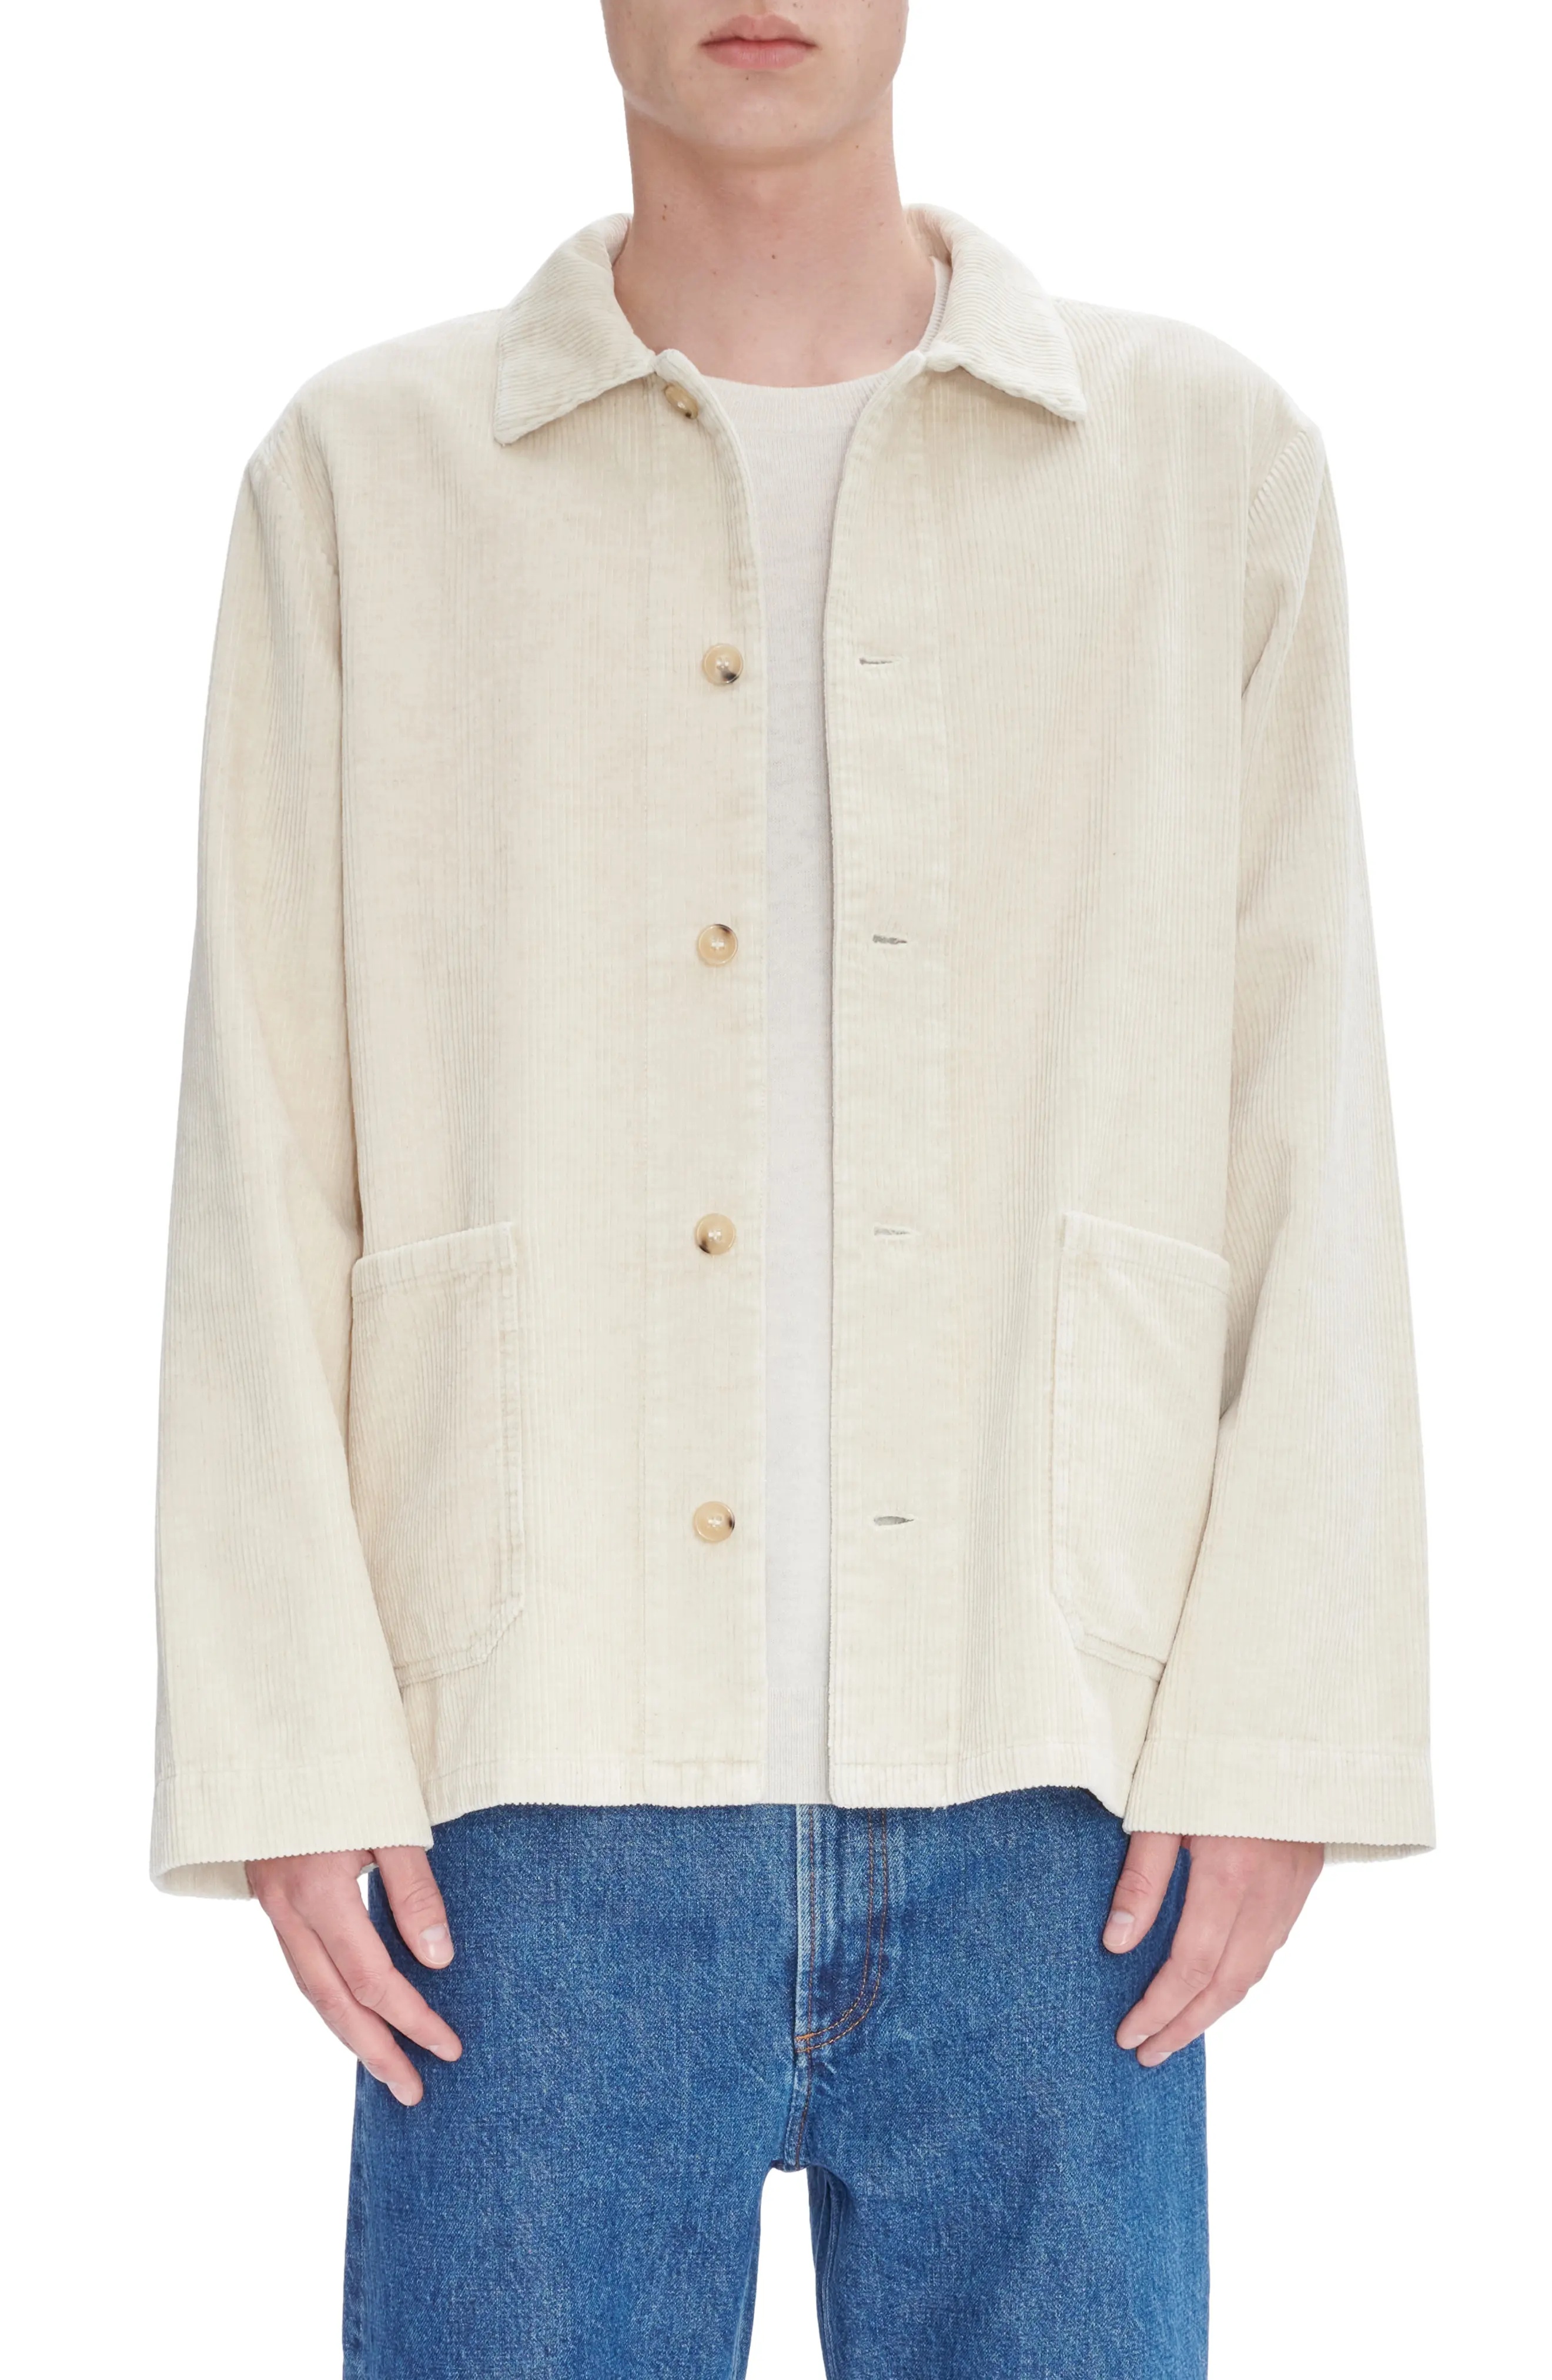 A. P.C. Bobby Oversize Cotton & Linen Corduroy Button-Up Shirt Jacket - 1